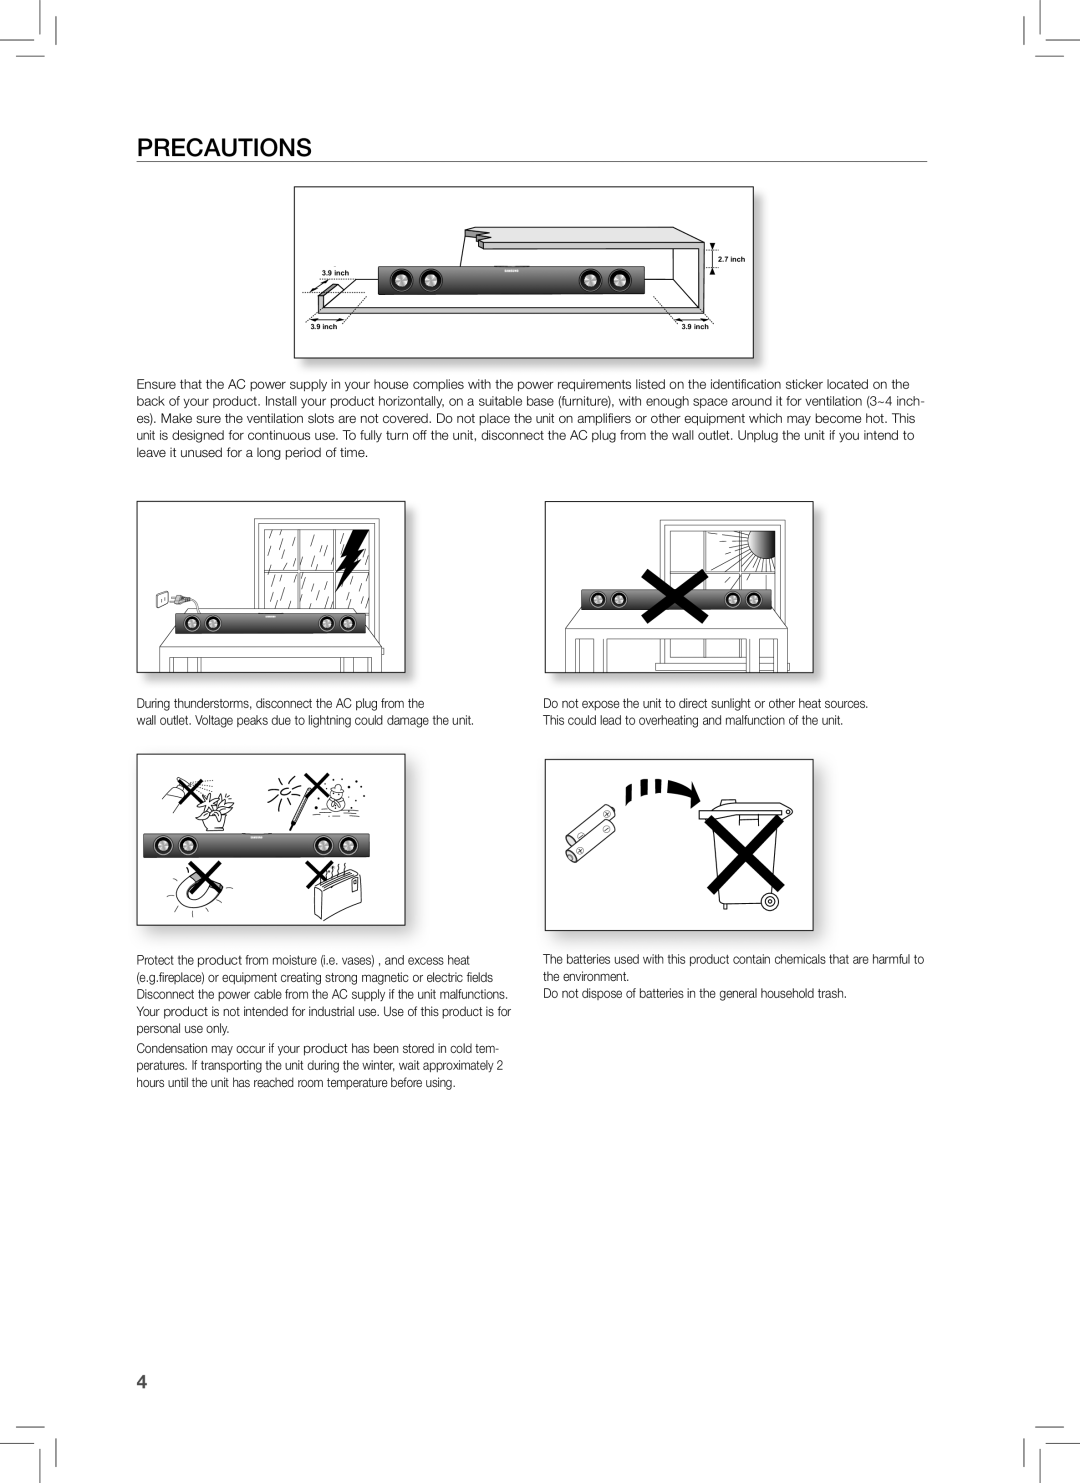 Samsung HW-E350 user manual Precautions, inch 